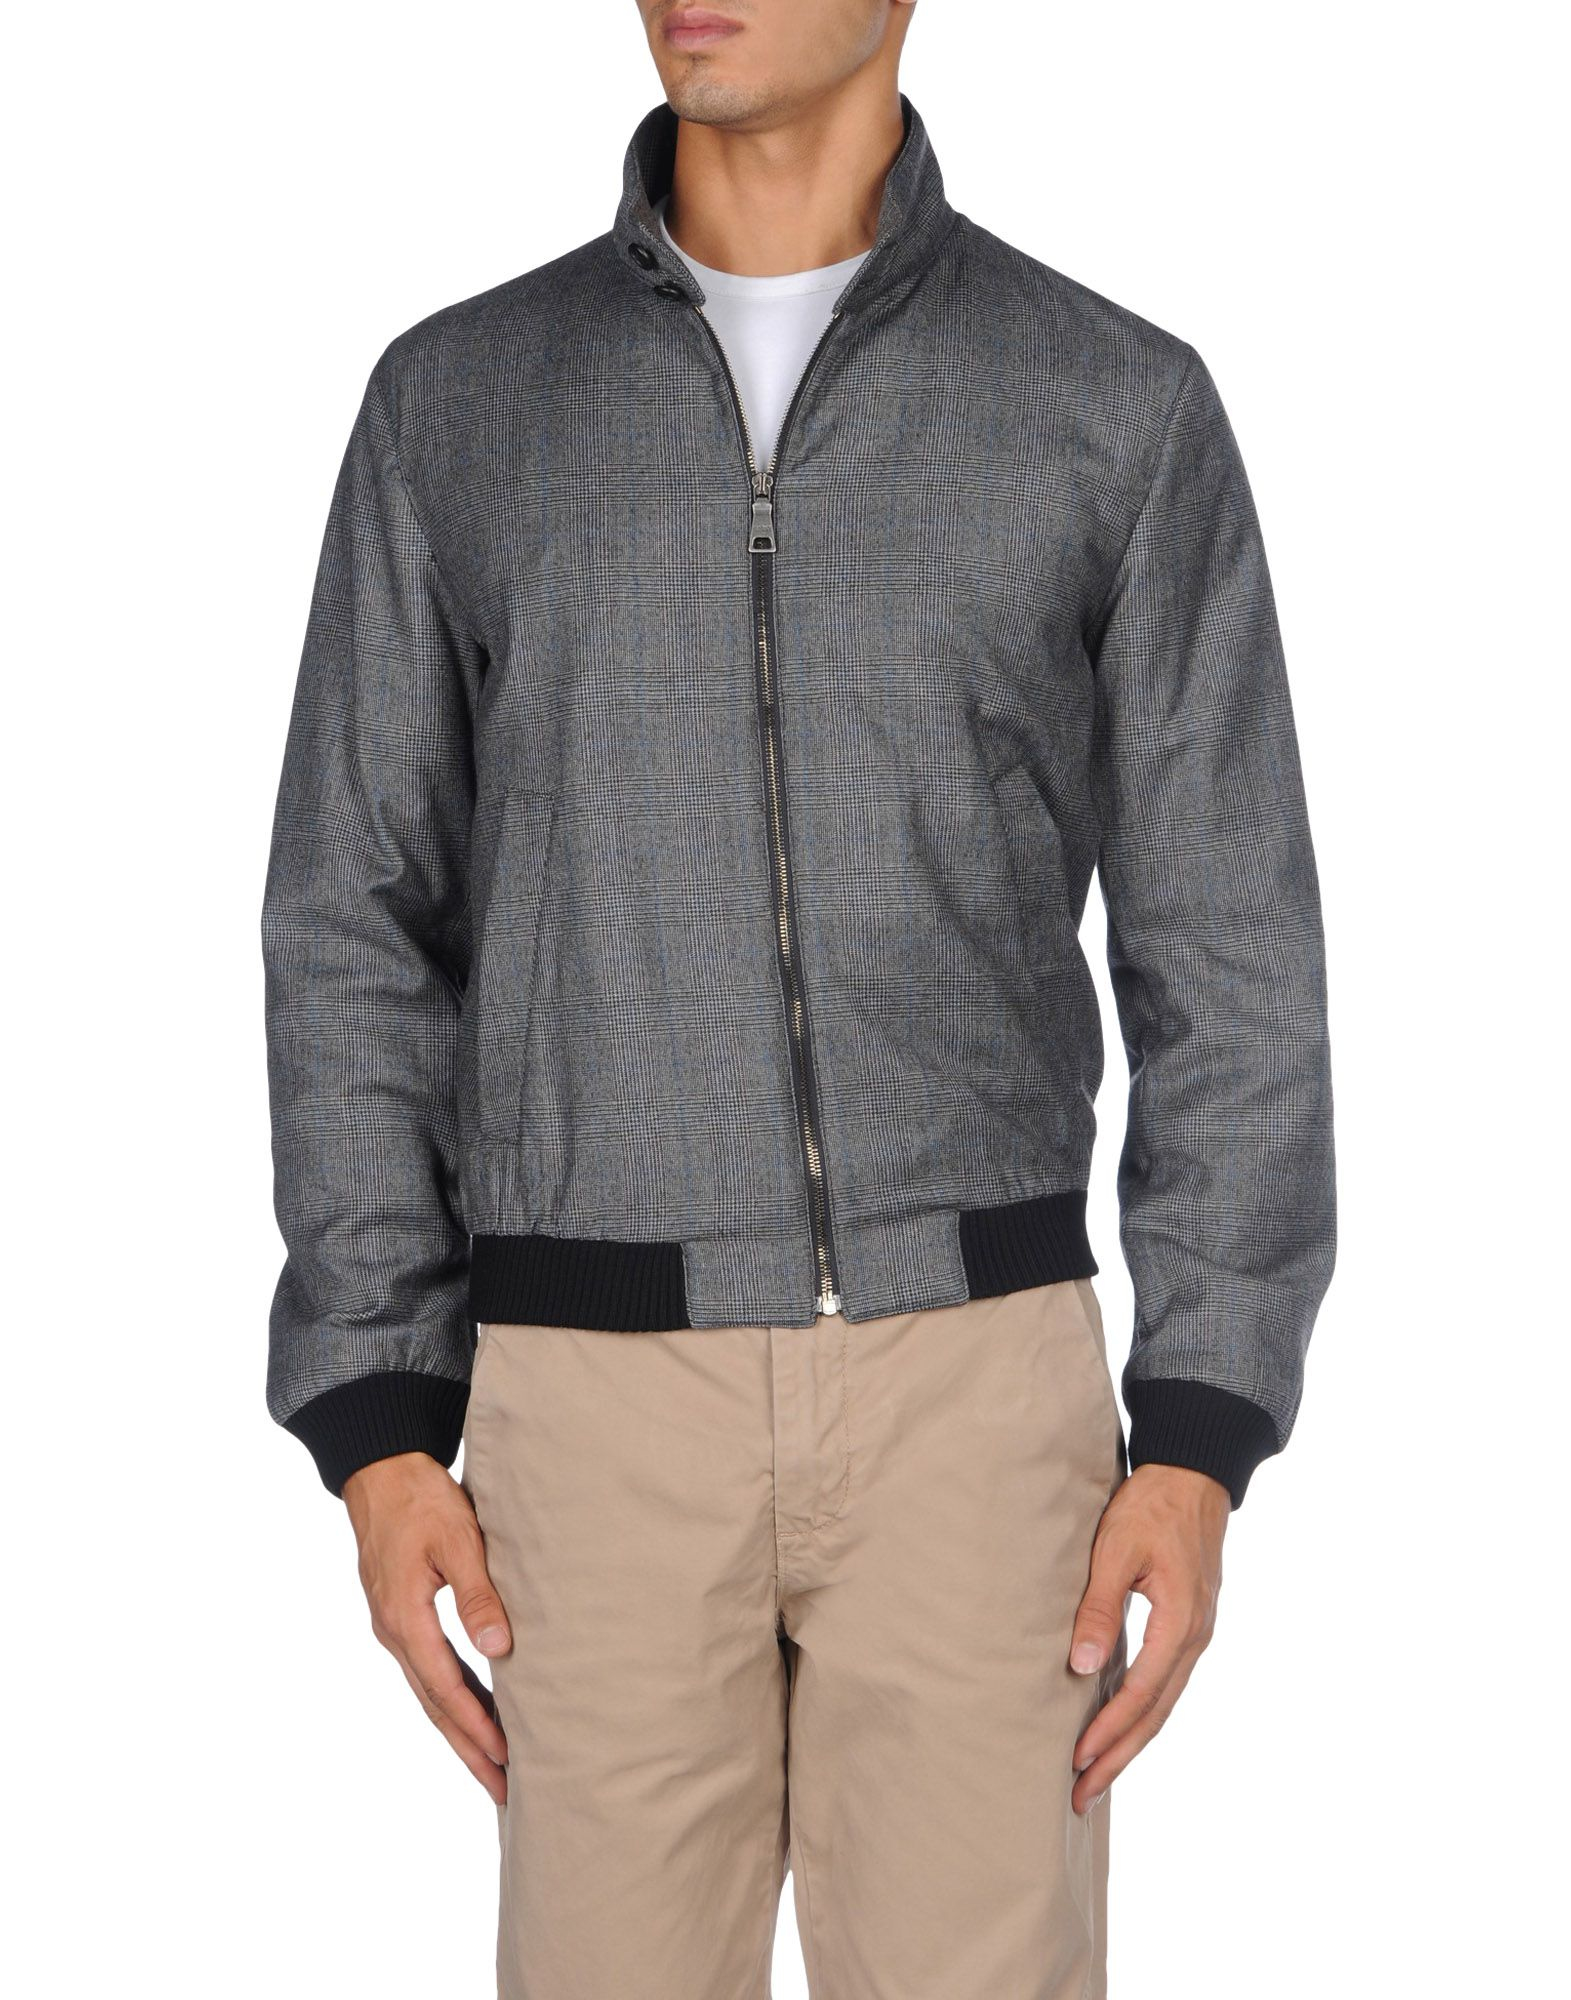 Lyst - Prada Jacket in Gray for Men